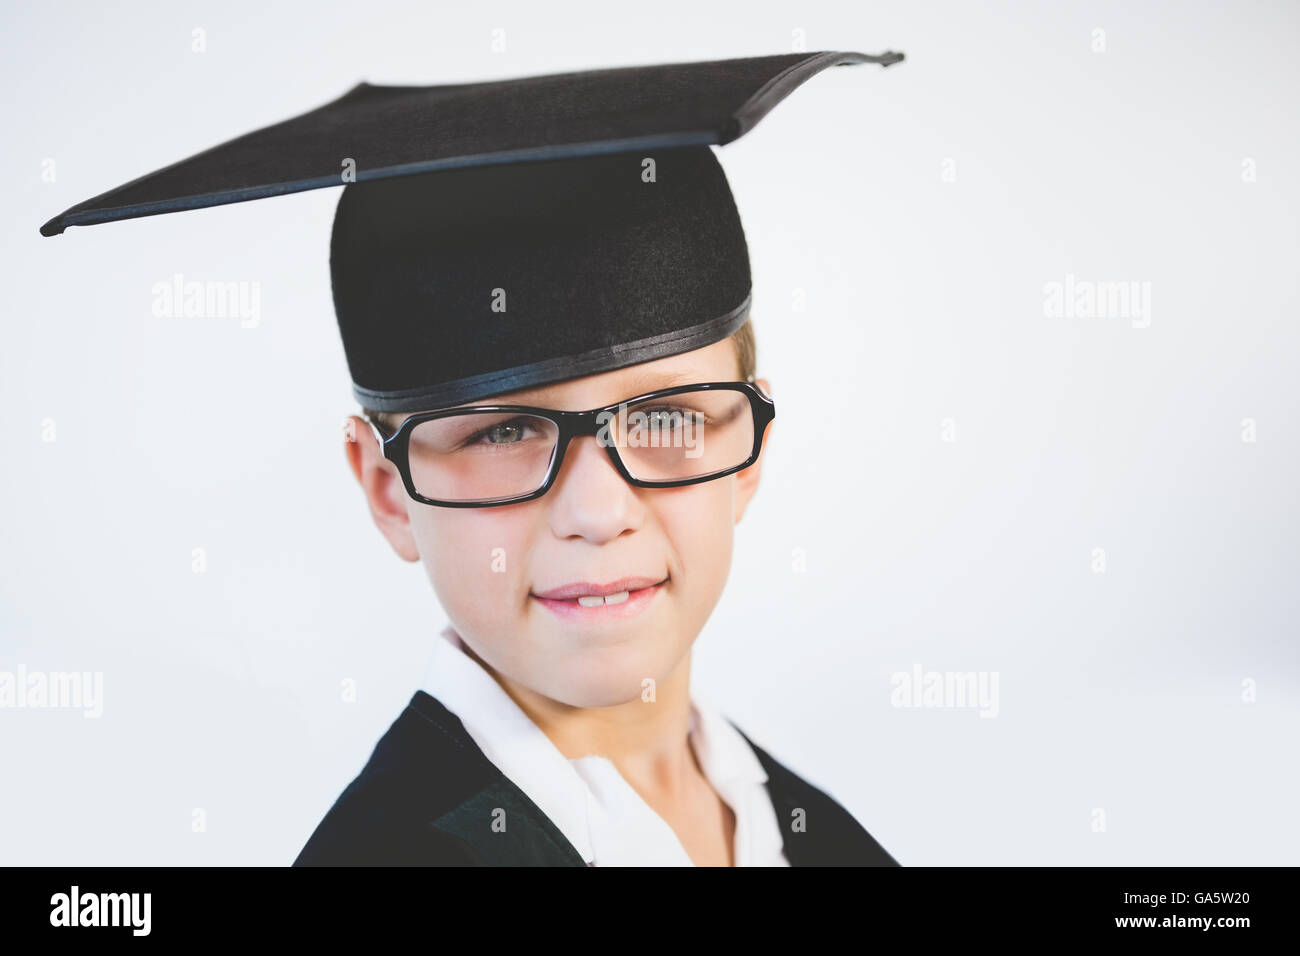 Retrato de schoolkid fingiendo ser graduado Foto de stock